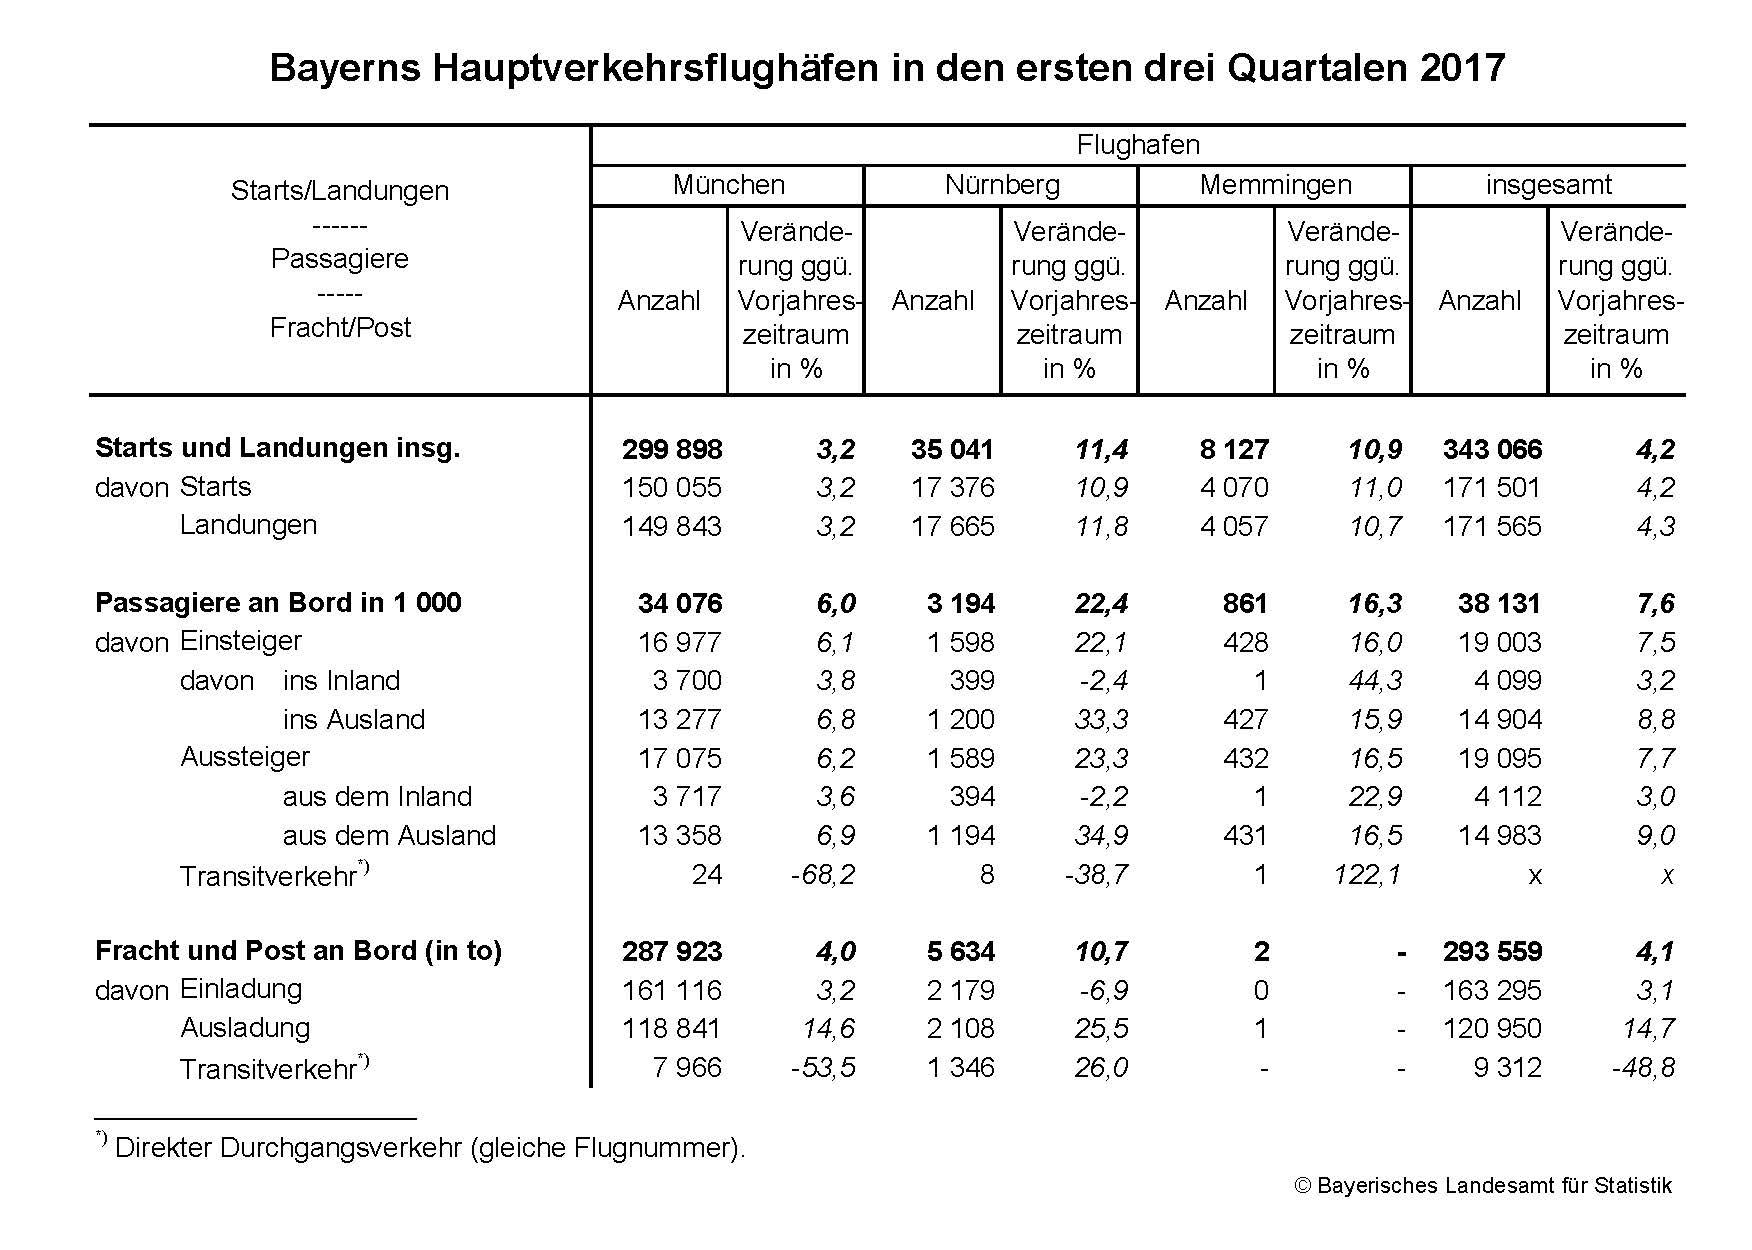 Bayerns Hauptverkehrsflughäfen in den ersten drei Quartalen 2017